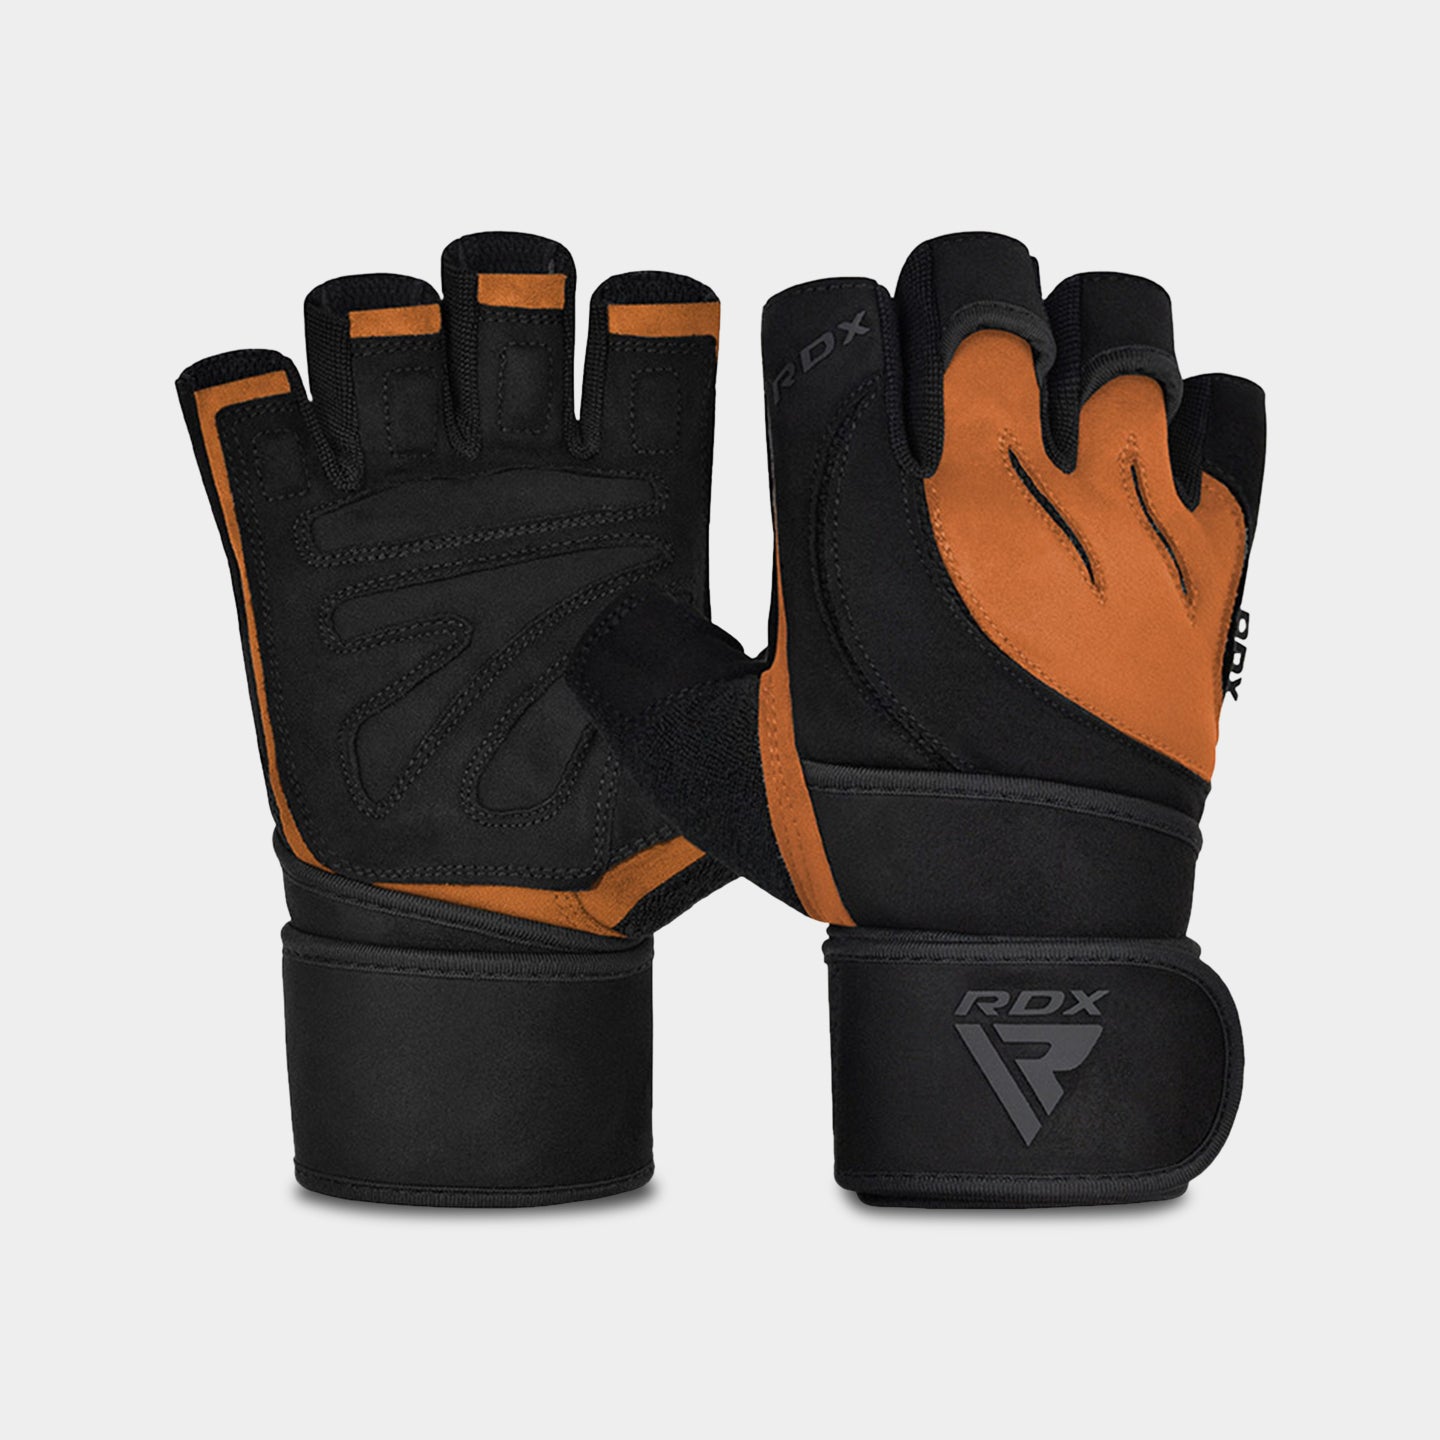 RDX Sports L4 Open Finger Weightlifting Gym Gloves, XL, Tan/Black A1